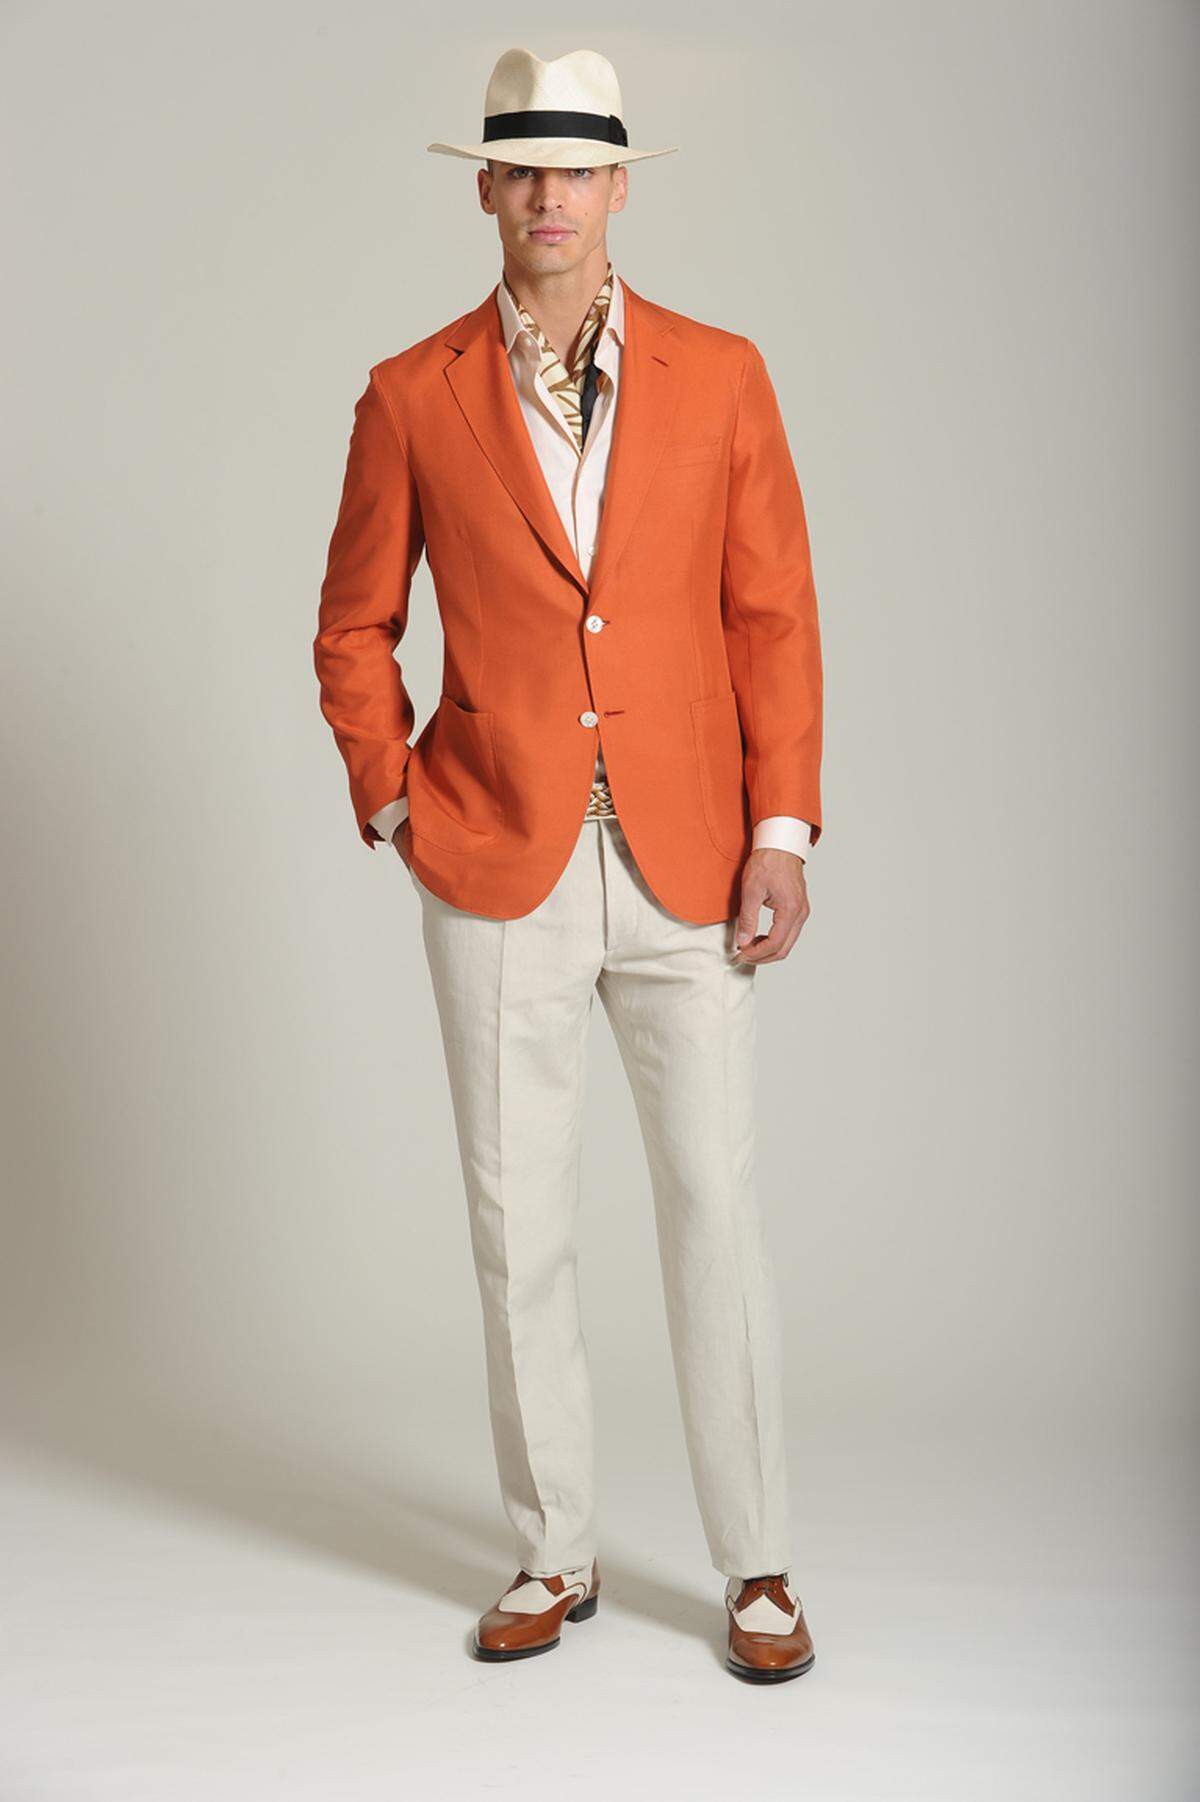 Den Dandy-Stil in Orange trägt man bei Brioni.